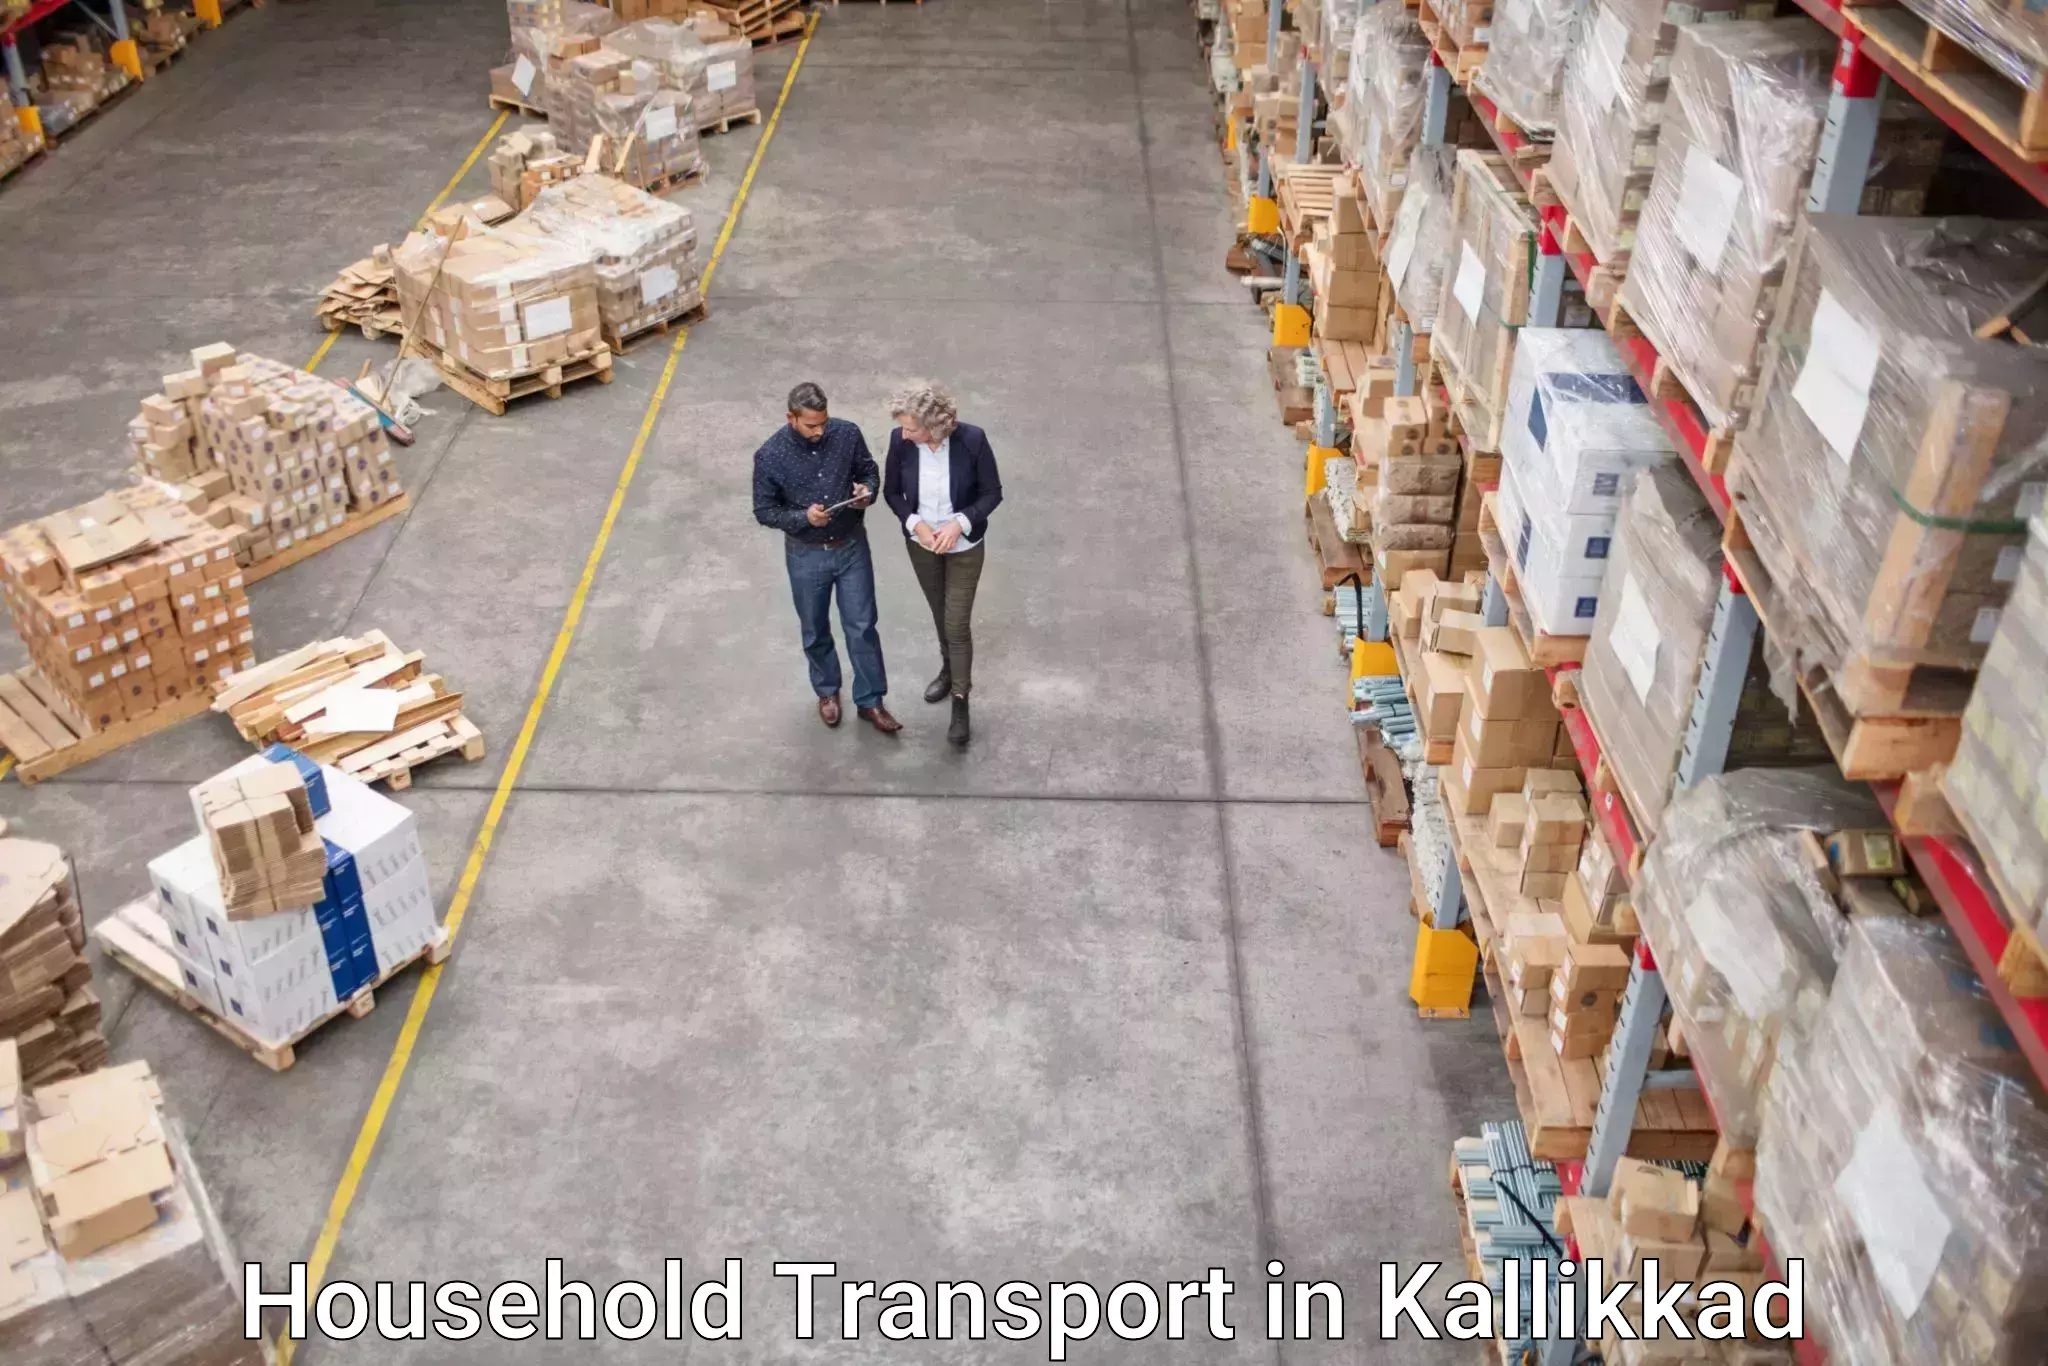 Reliable goods transport in Kallikkad